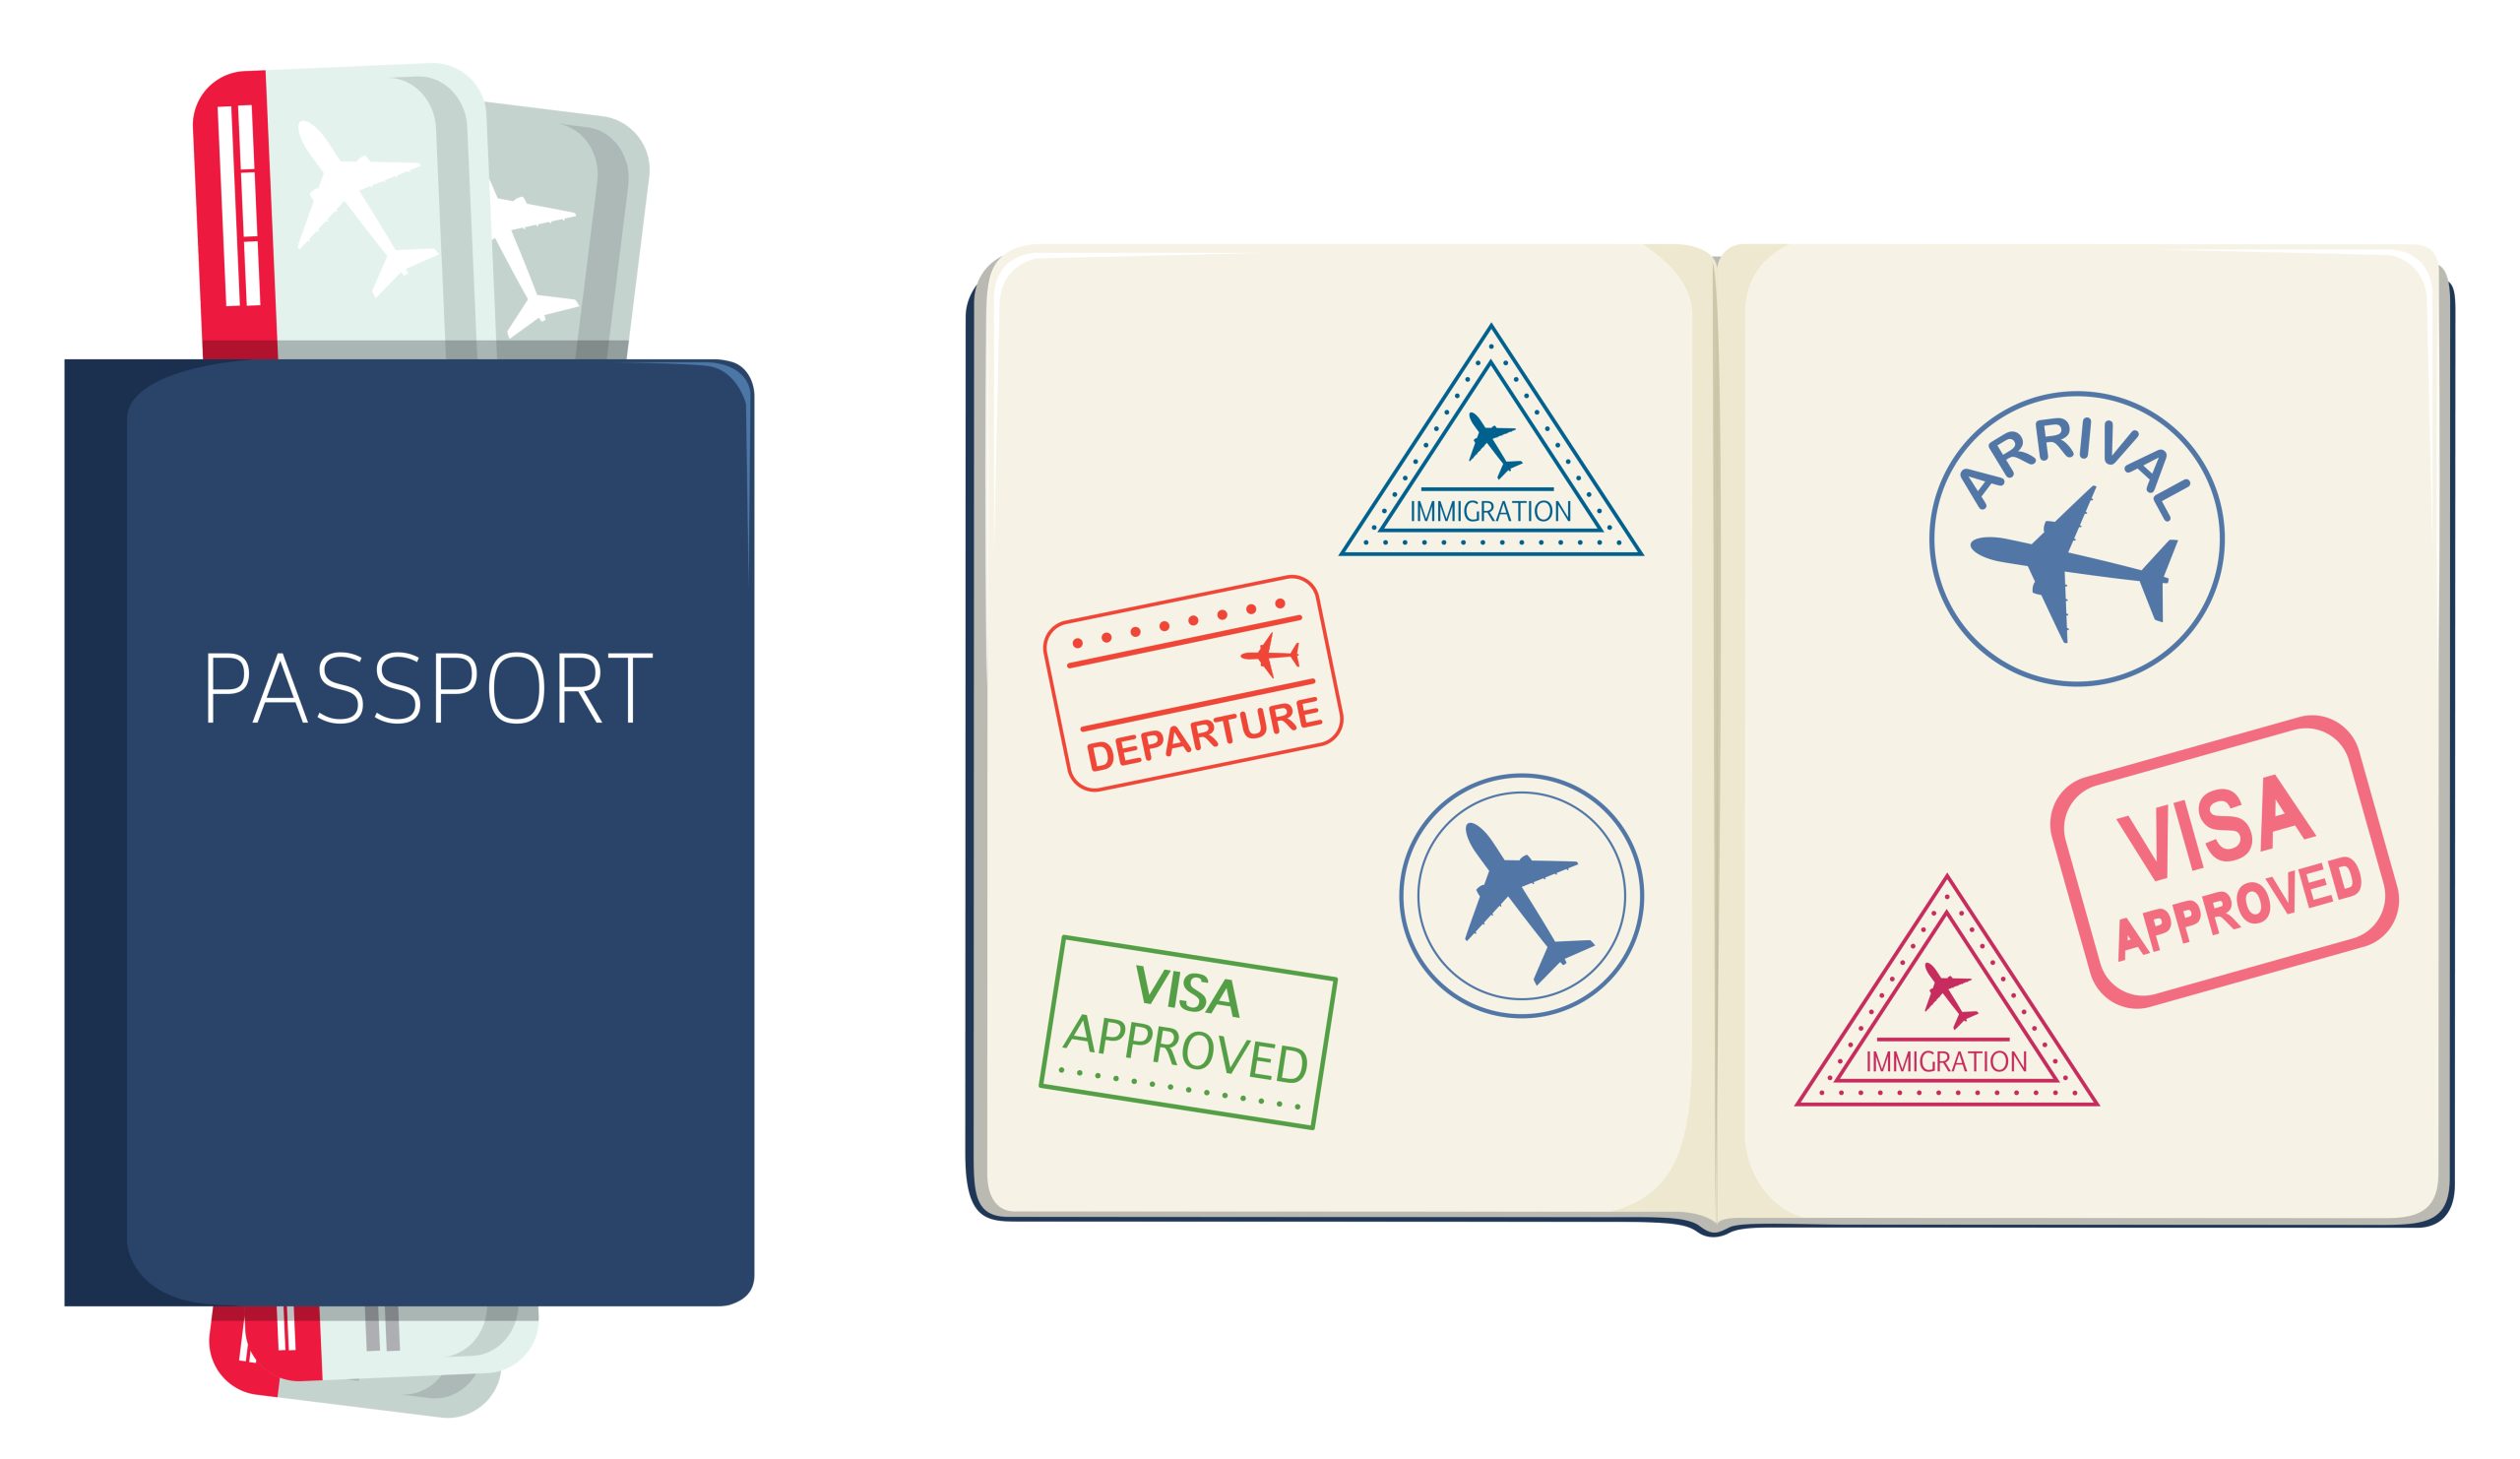 Passport on white background illustration